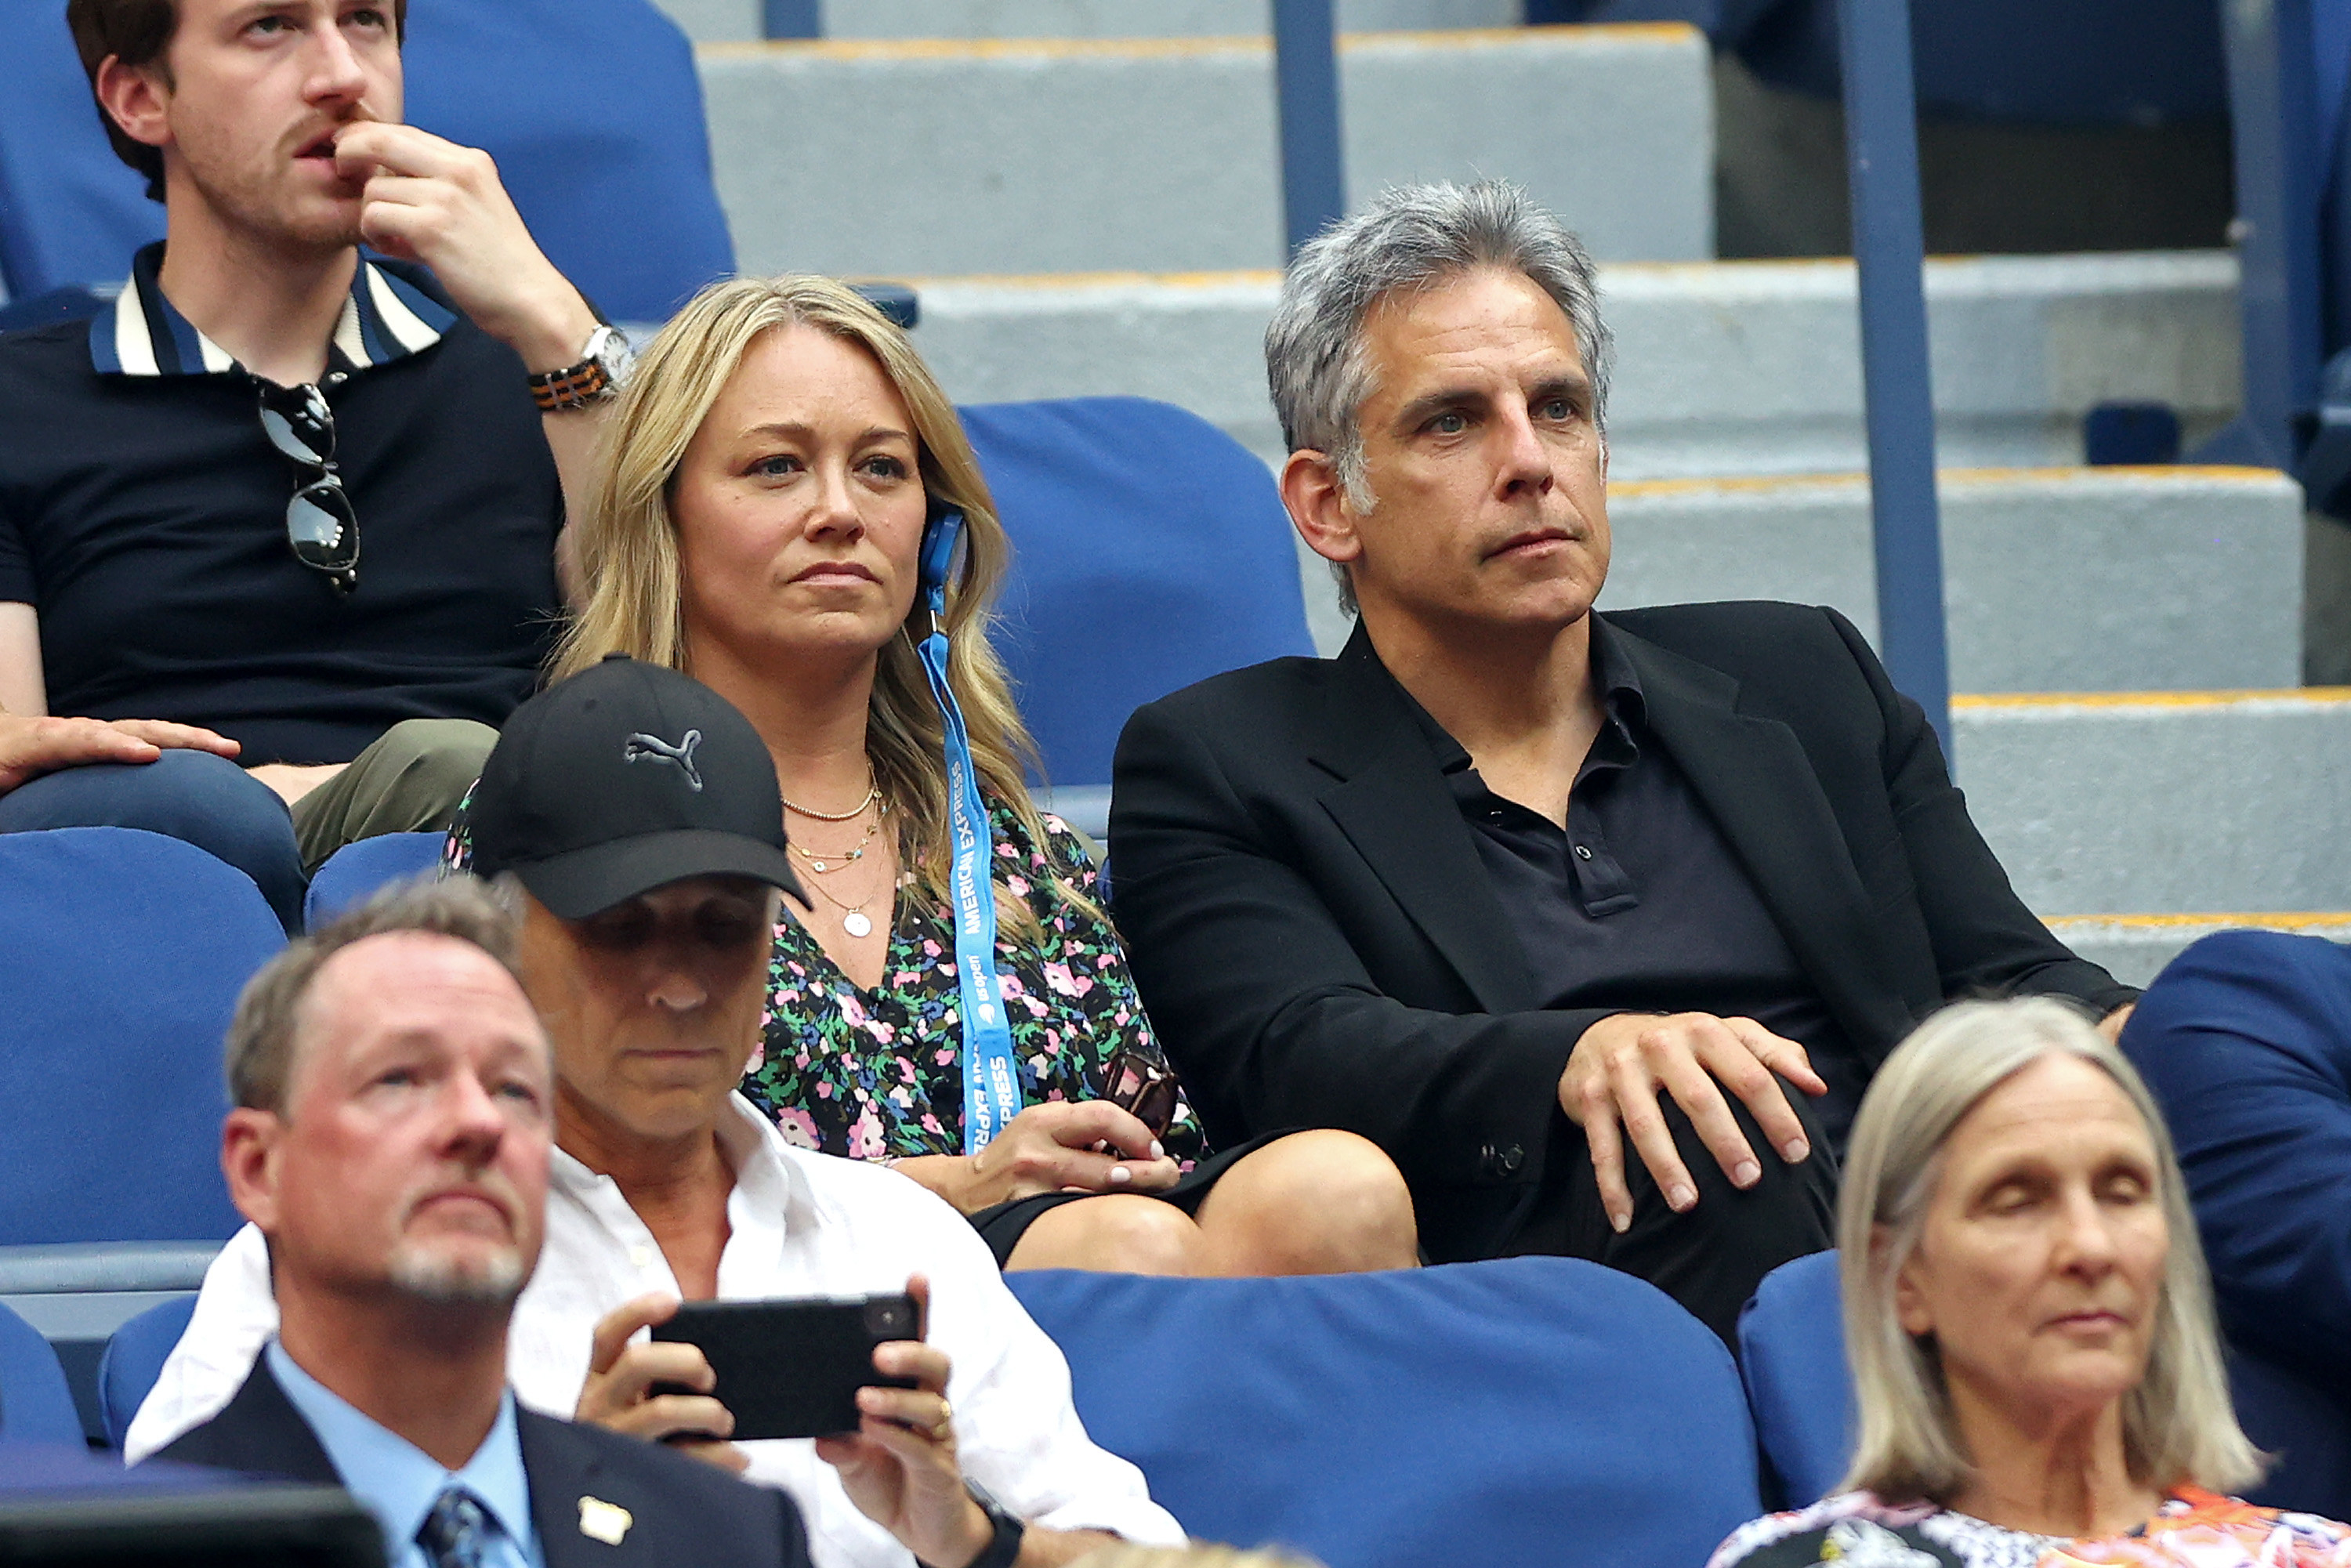 Christine Taylor and Ben Stiller sitting together at a tennis match